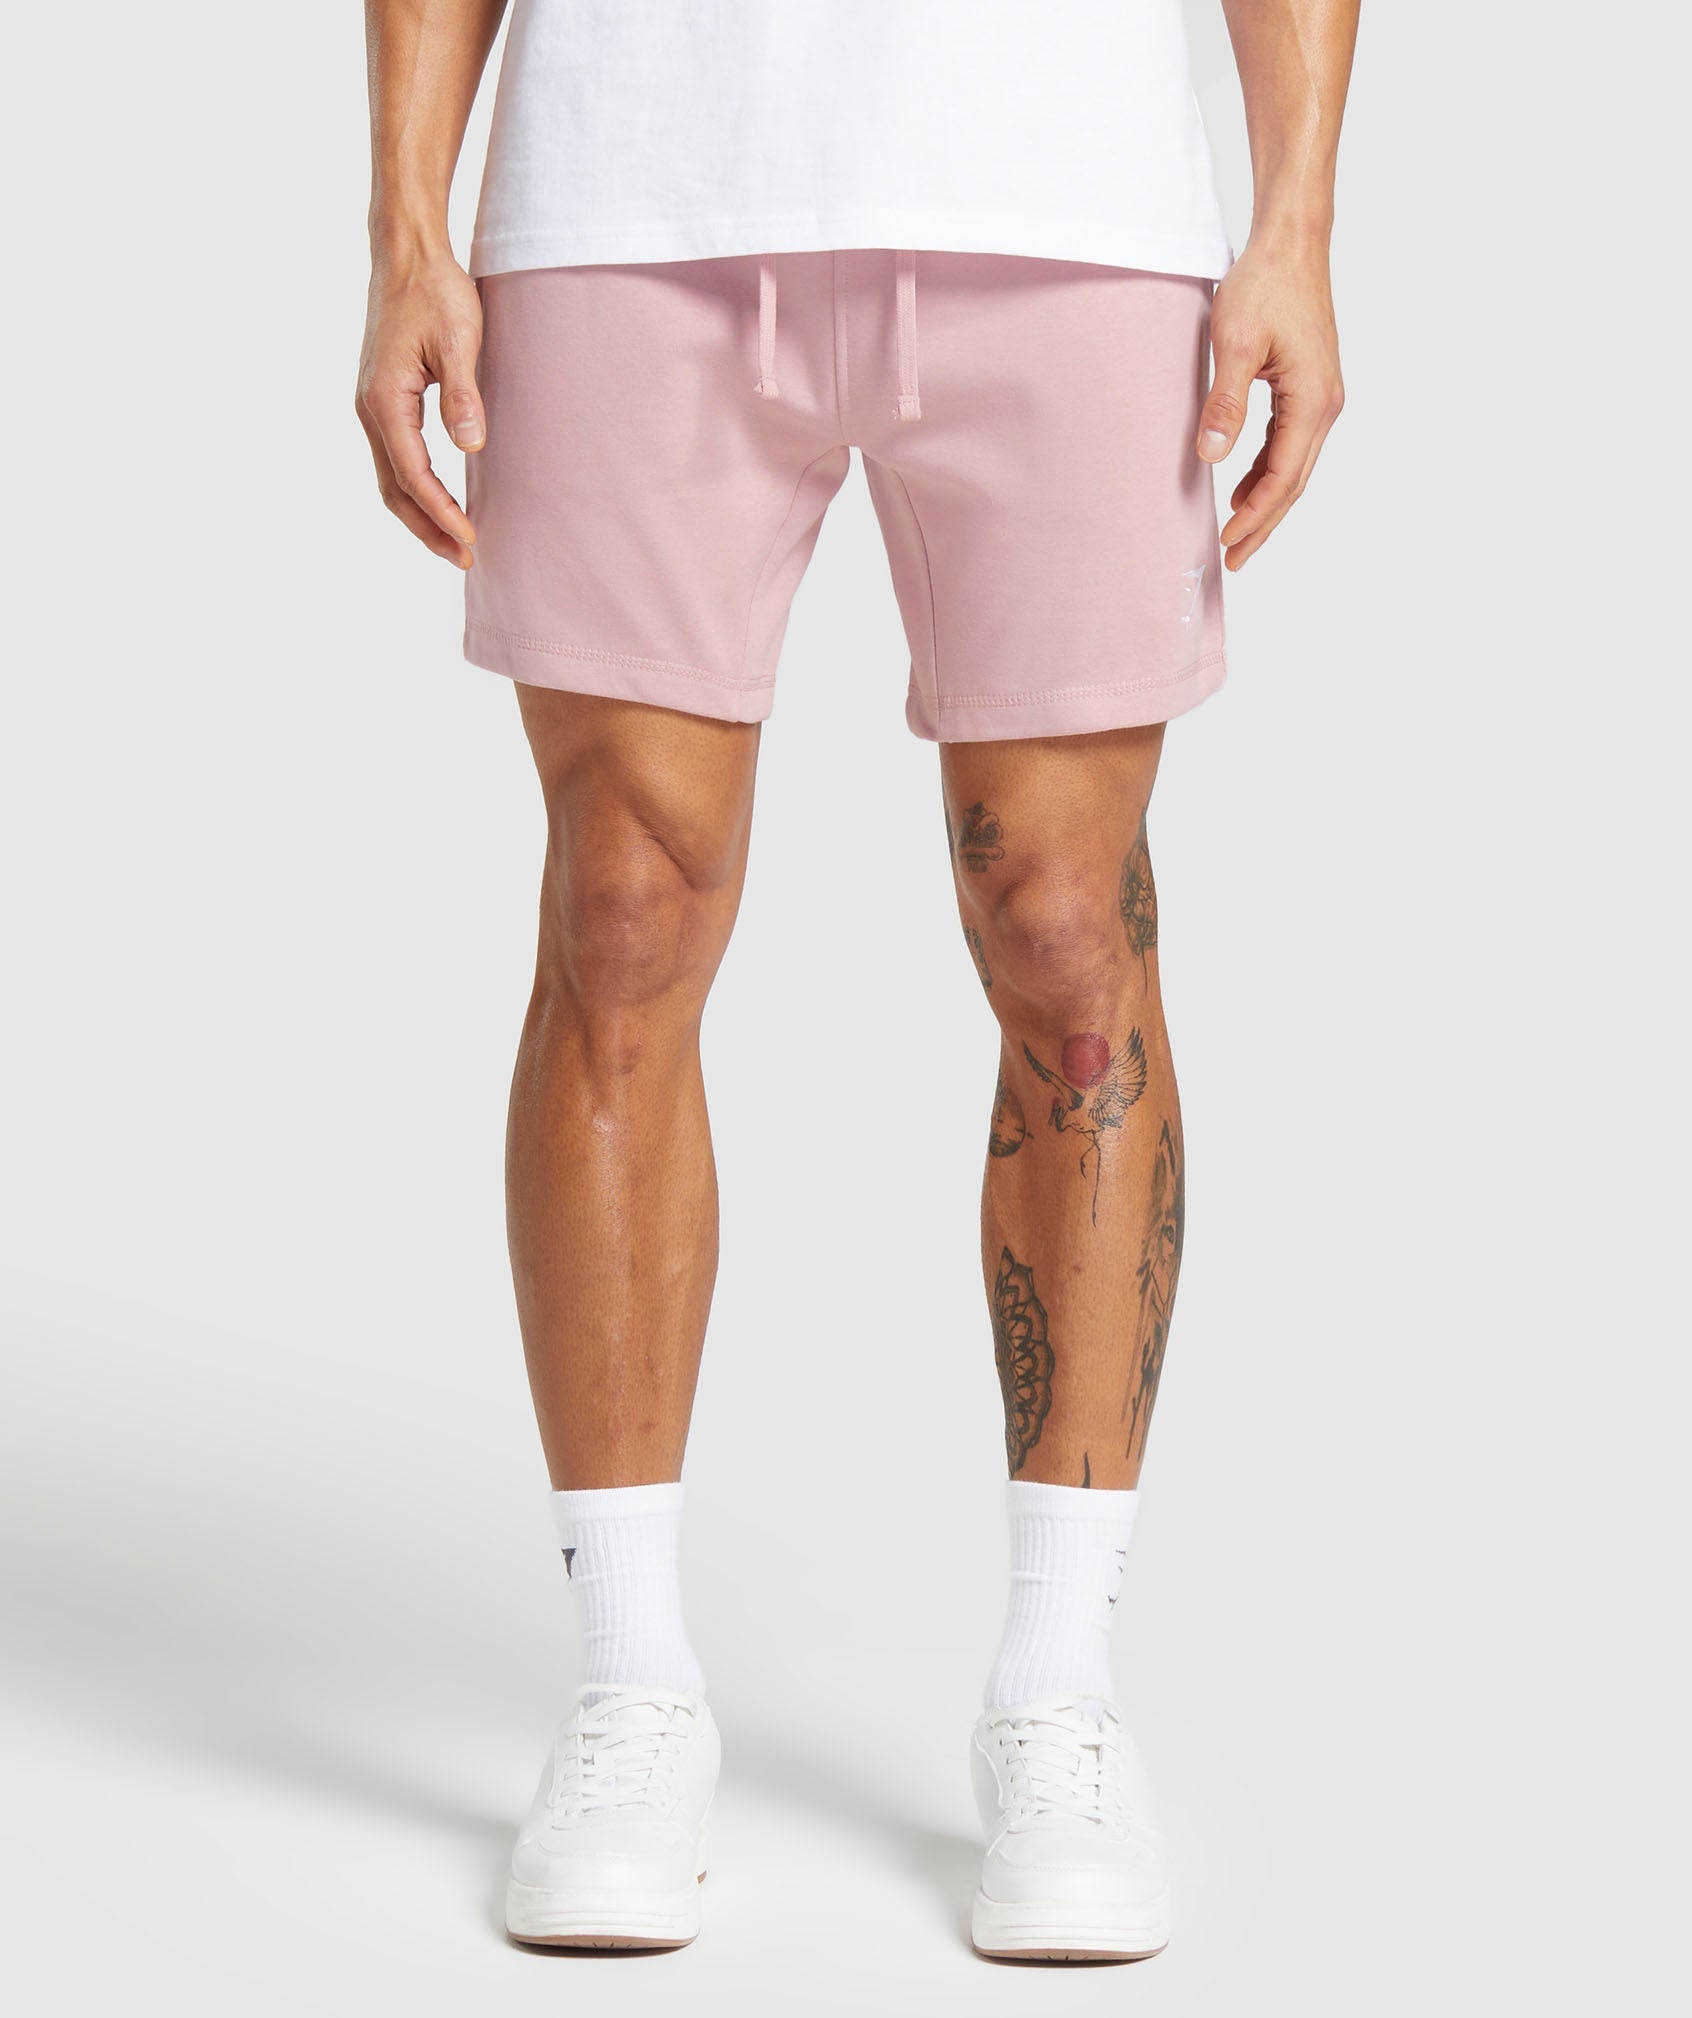 Crest 7" Shorts dans Light Pinkest en rupture de stock